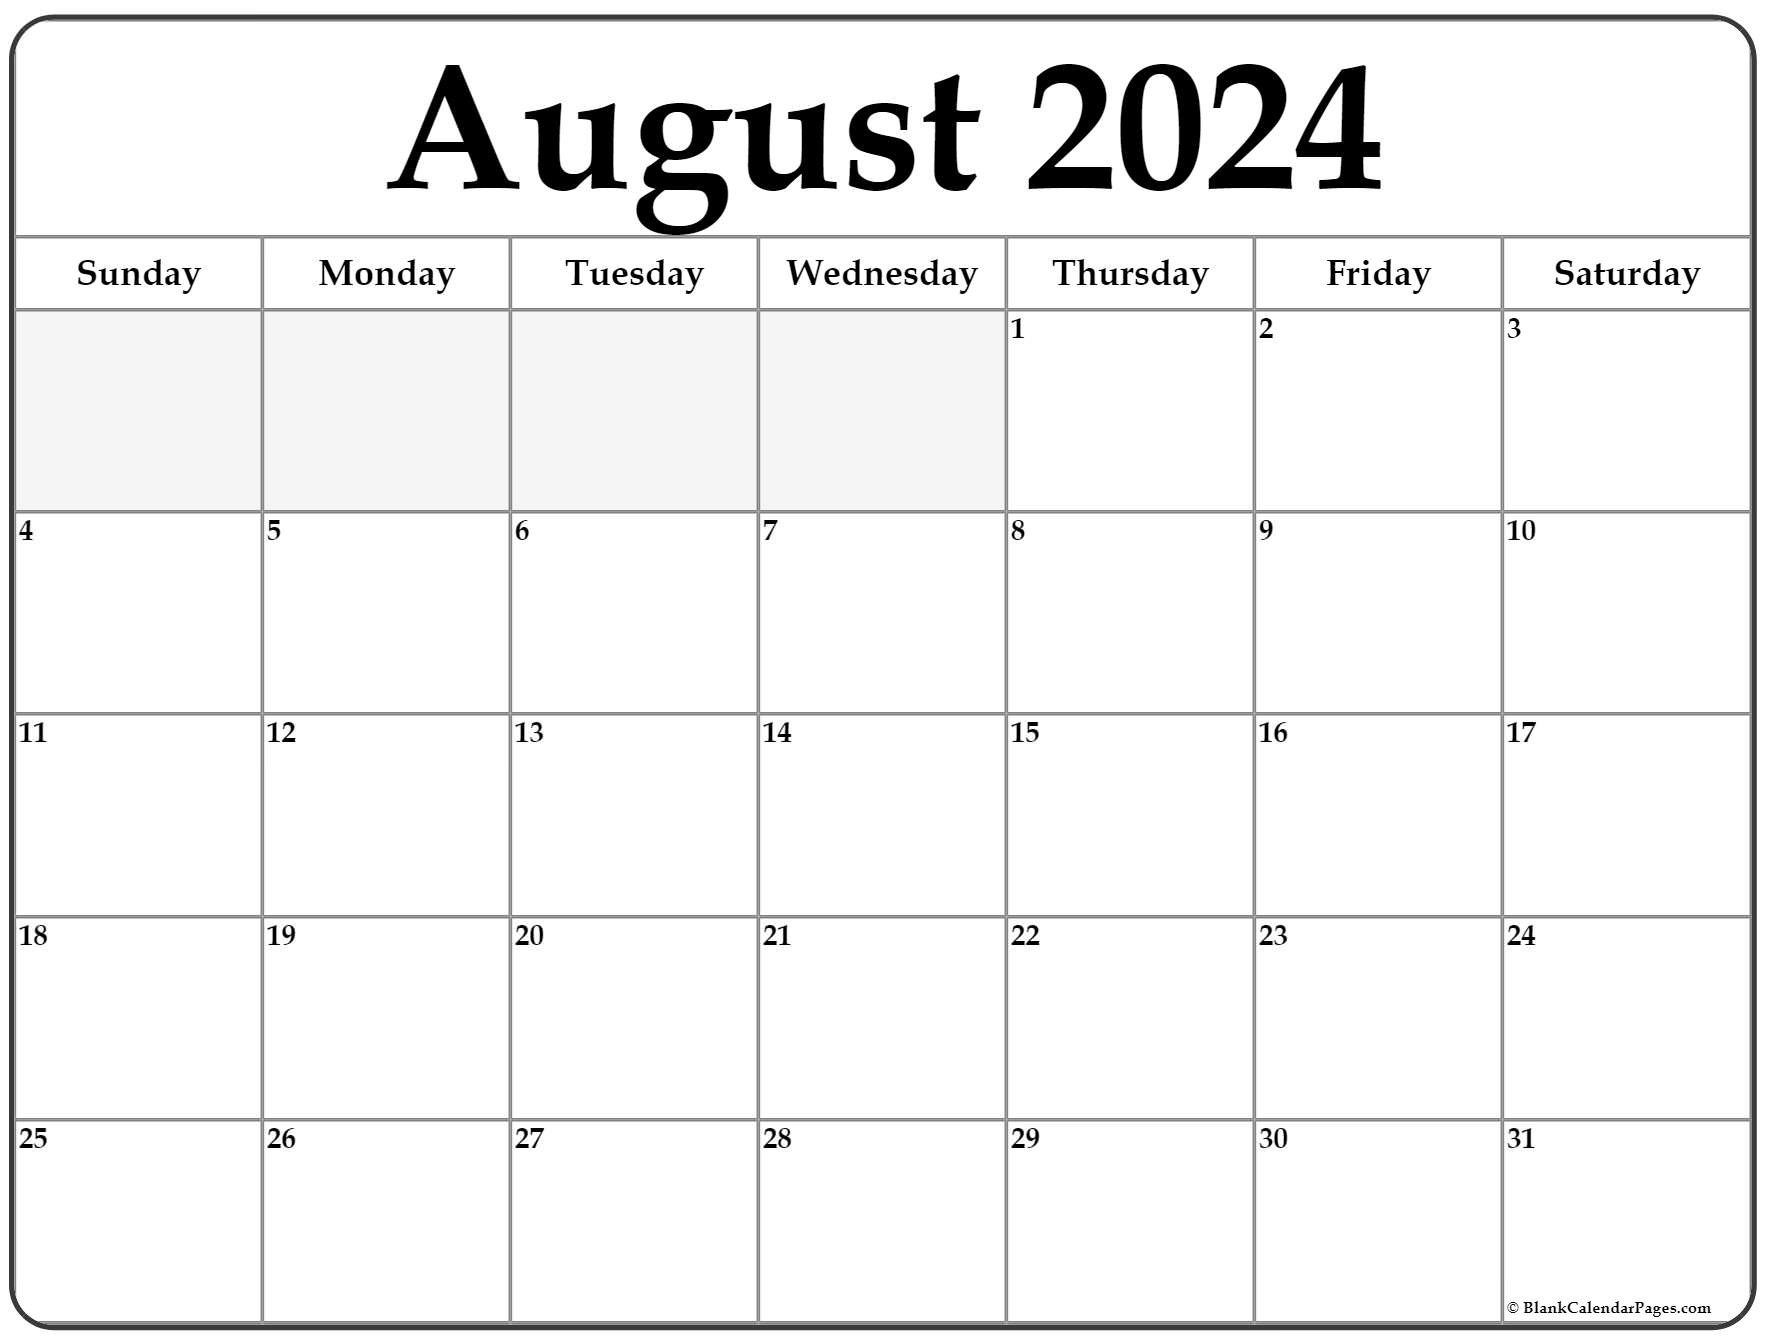 August 2024 Calendar | Free Printable Calendar with Free Printable August 2024 Blank Calendar